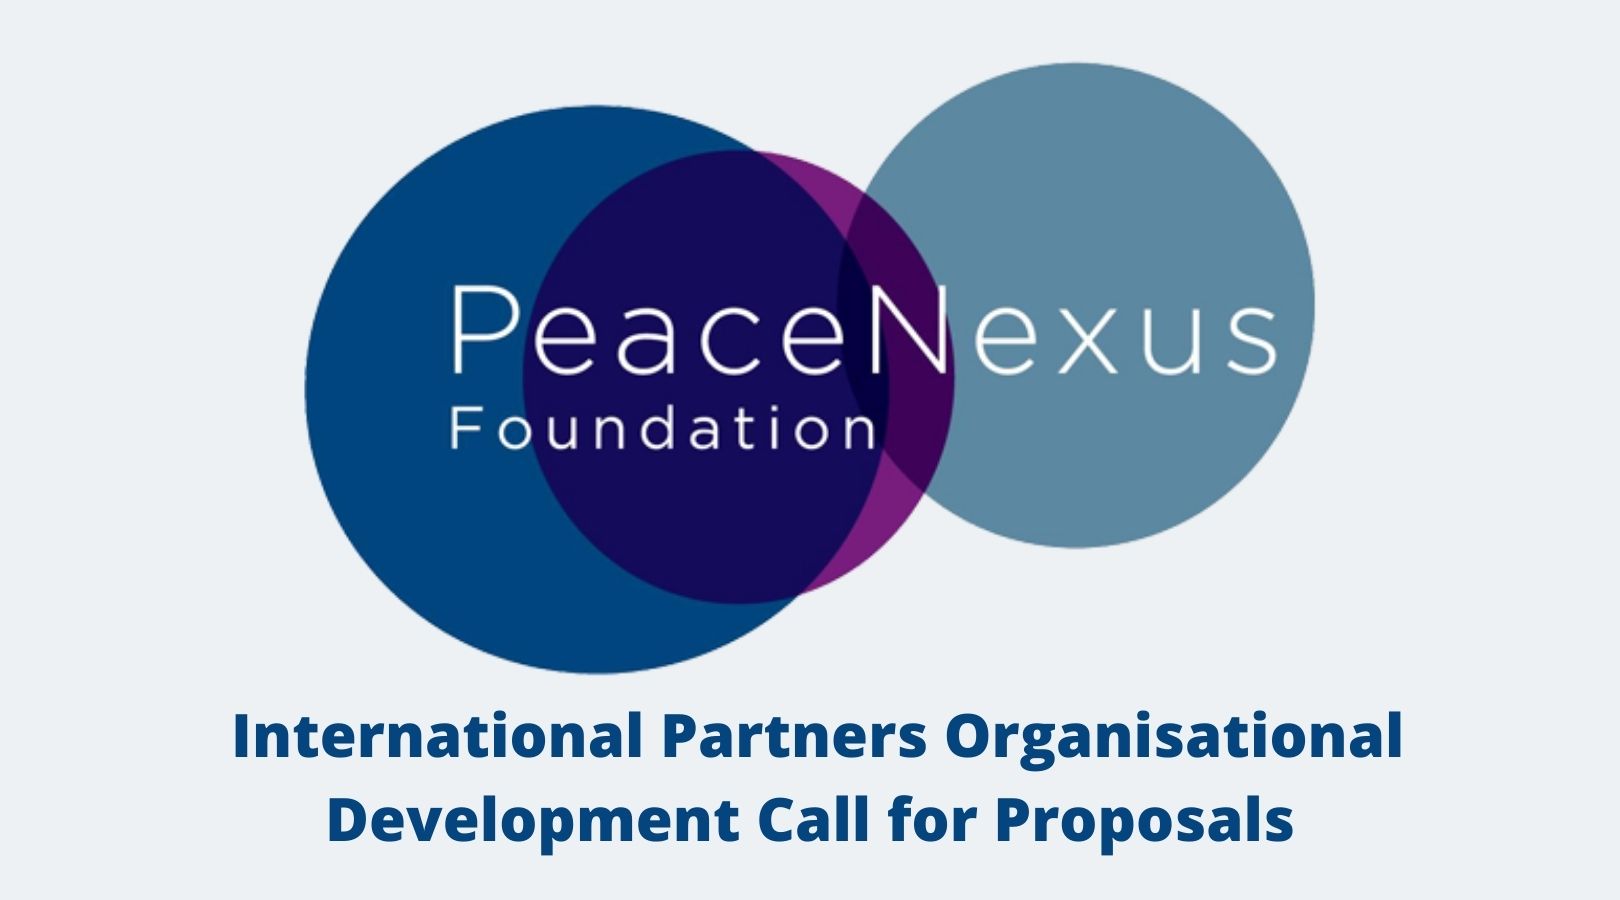 PeaceNexus International Partners Organisational Development 2020 Call for Proposals